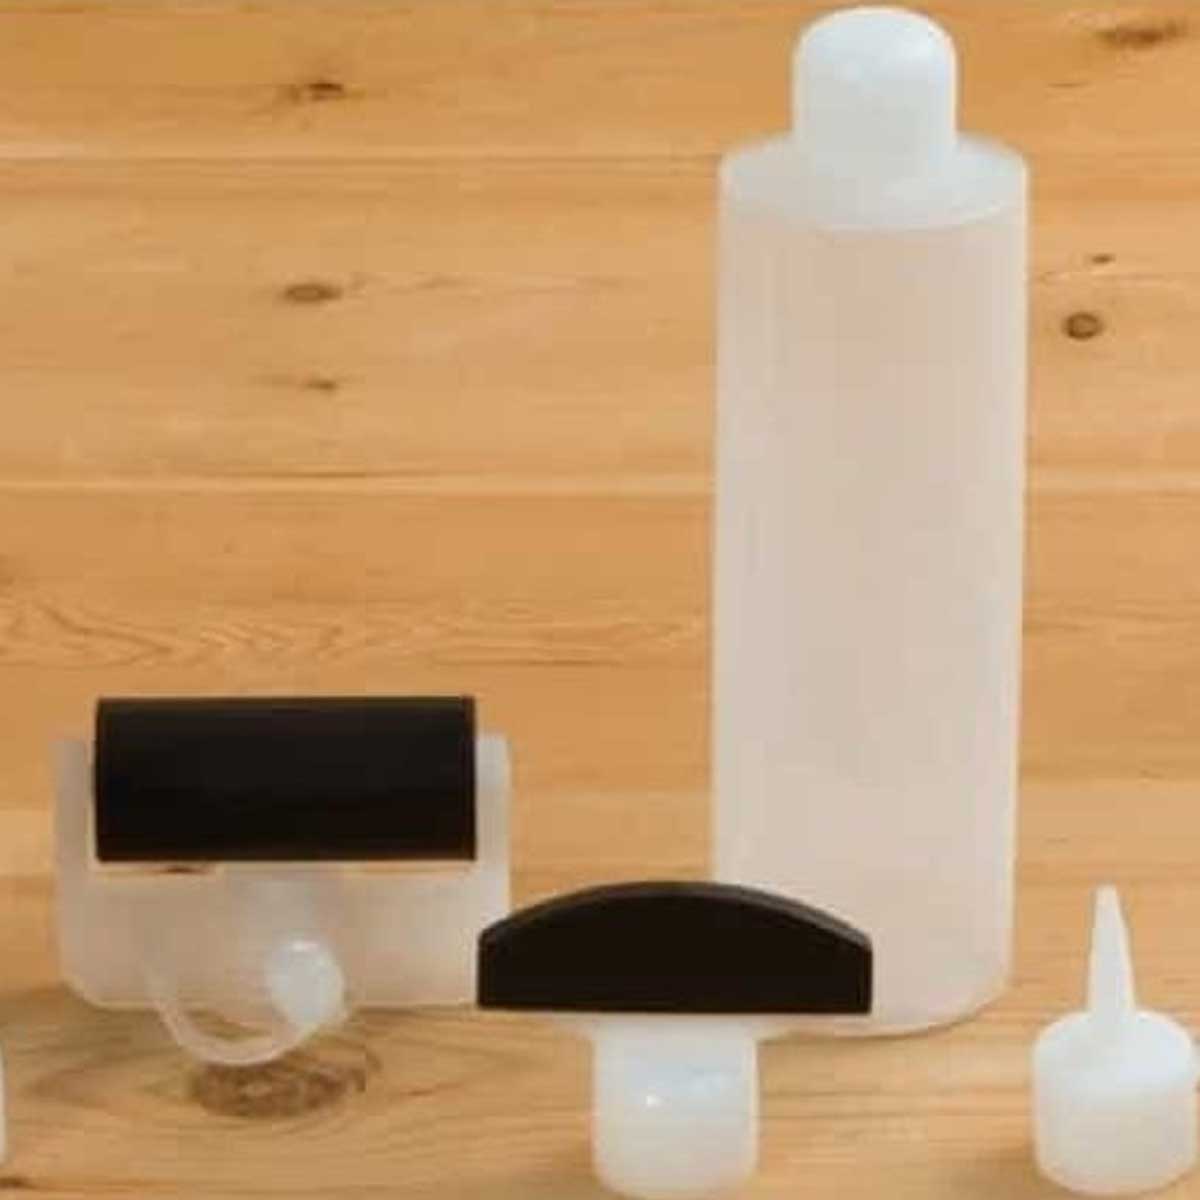 Glue Bottle Applicator Set Manufacturers, Suppliers in Mumbai